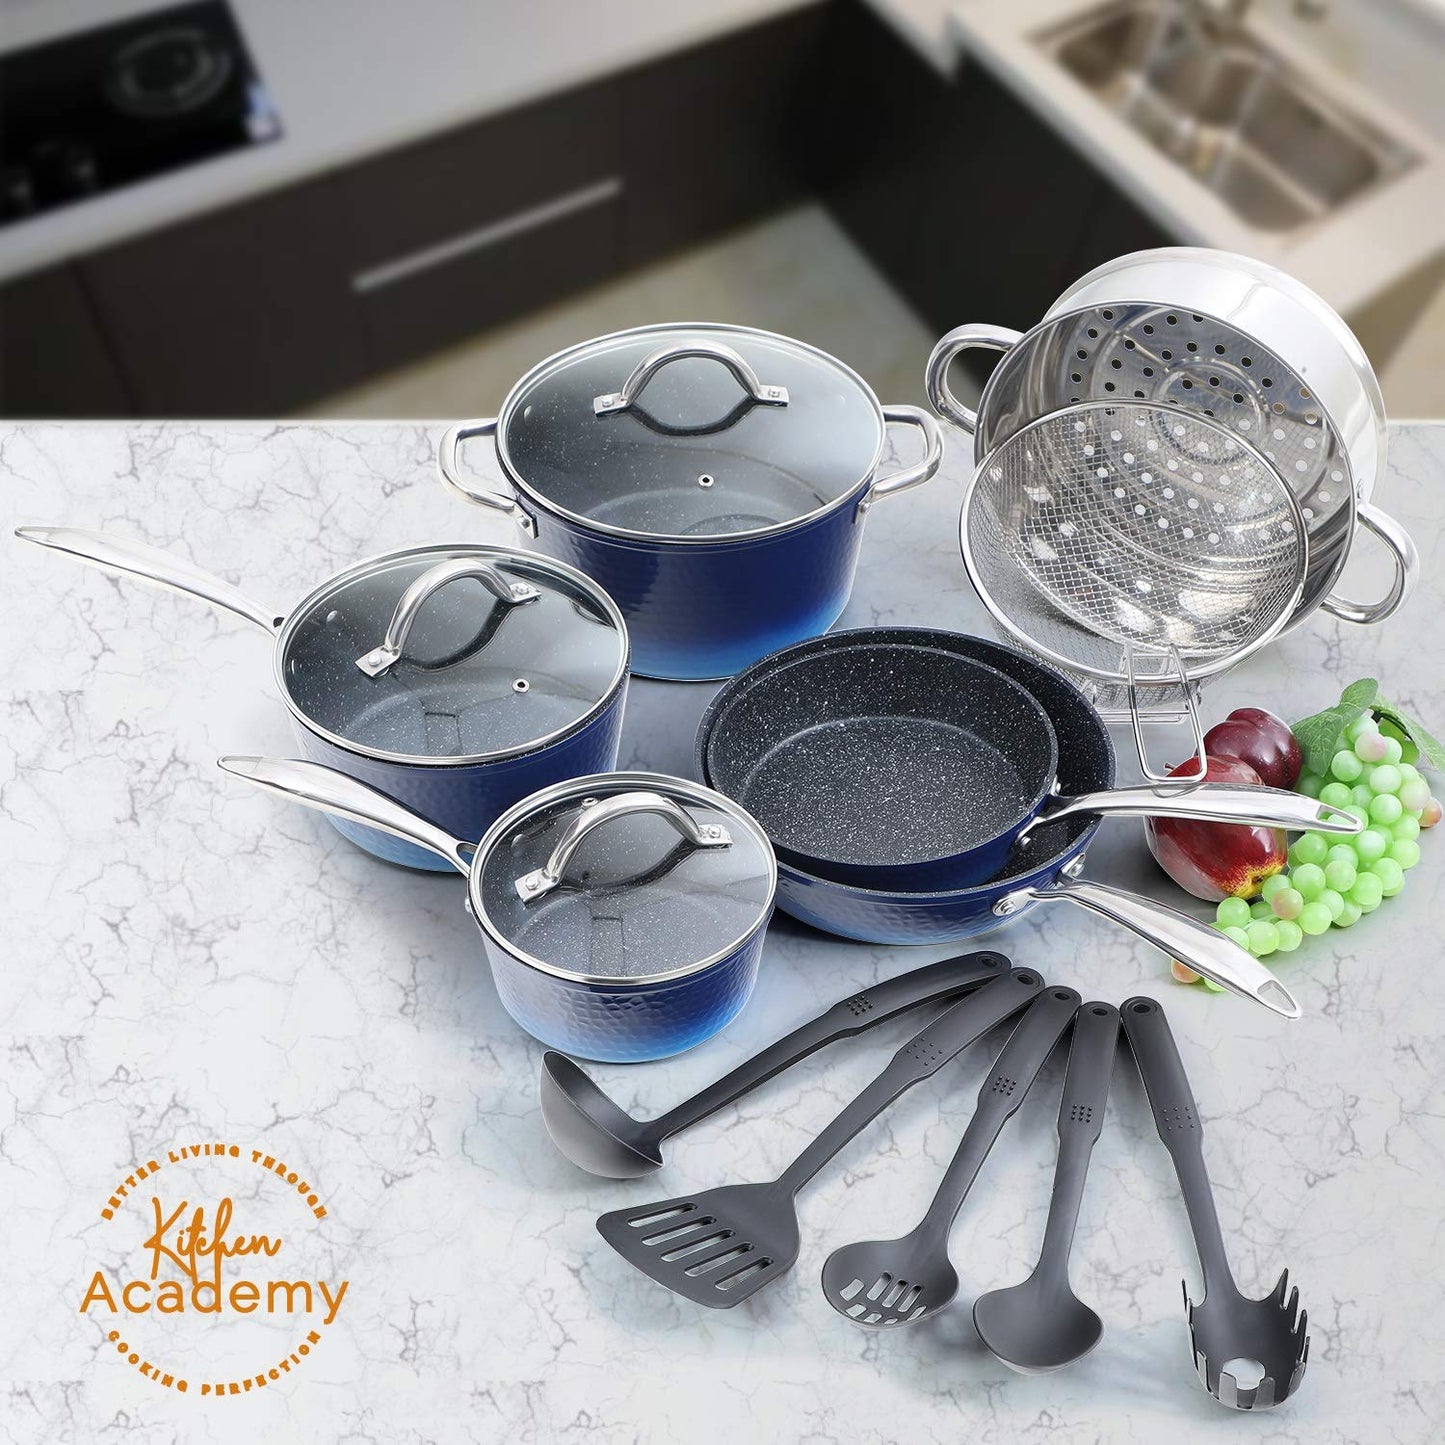 Kitchen Academy 100% PFOA Free 15 Piece Nonstick Granite-Coated Cookware Set